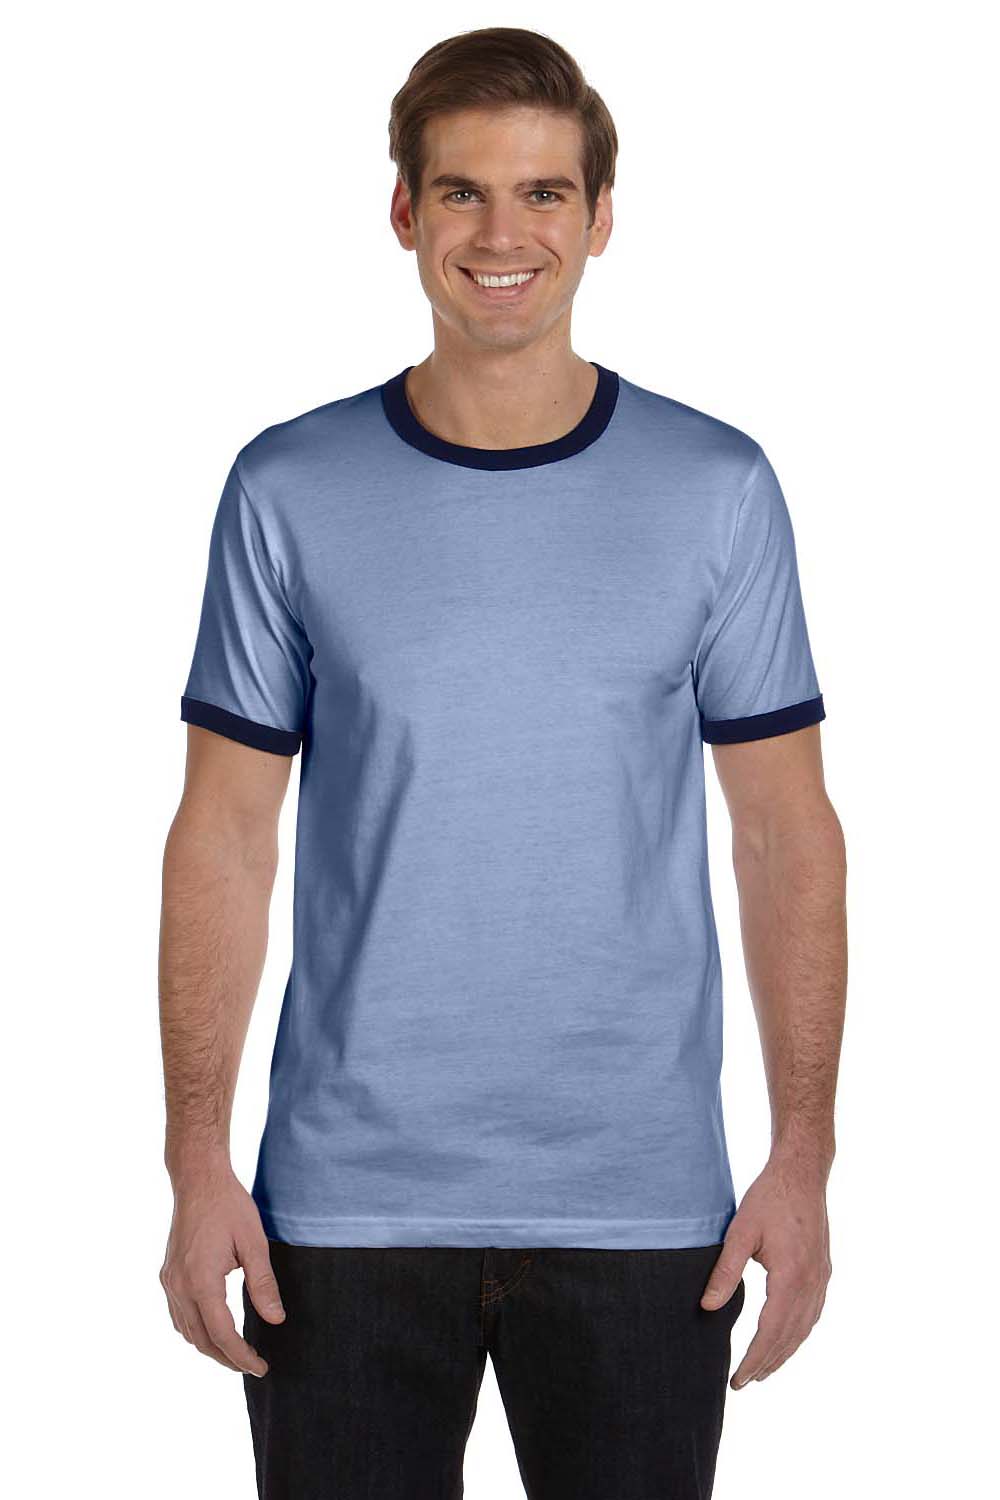 Bella + Canvas Mens Jersey Ringer Short Sleeve Crewneck T-Shirt - Heather  Blue/Navy Blue (DISCONTINUED)